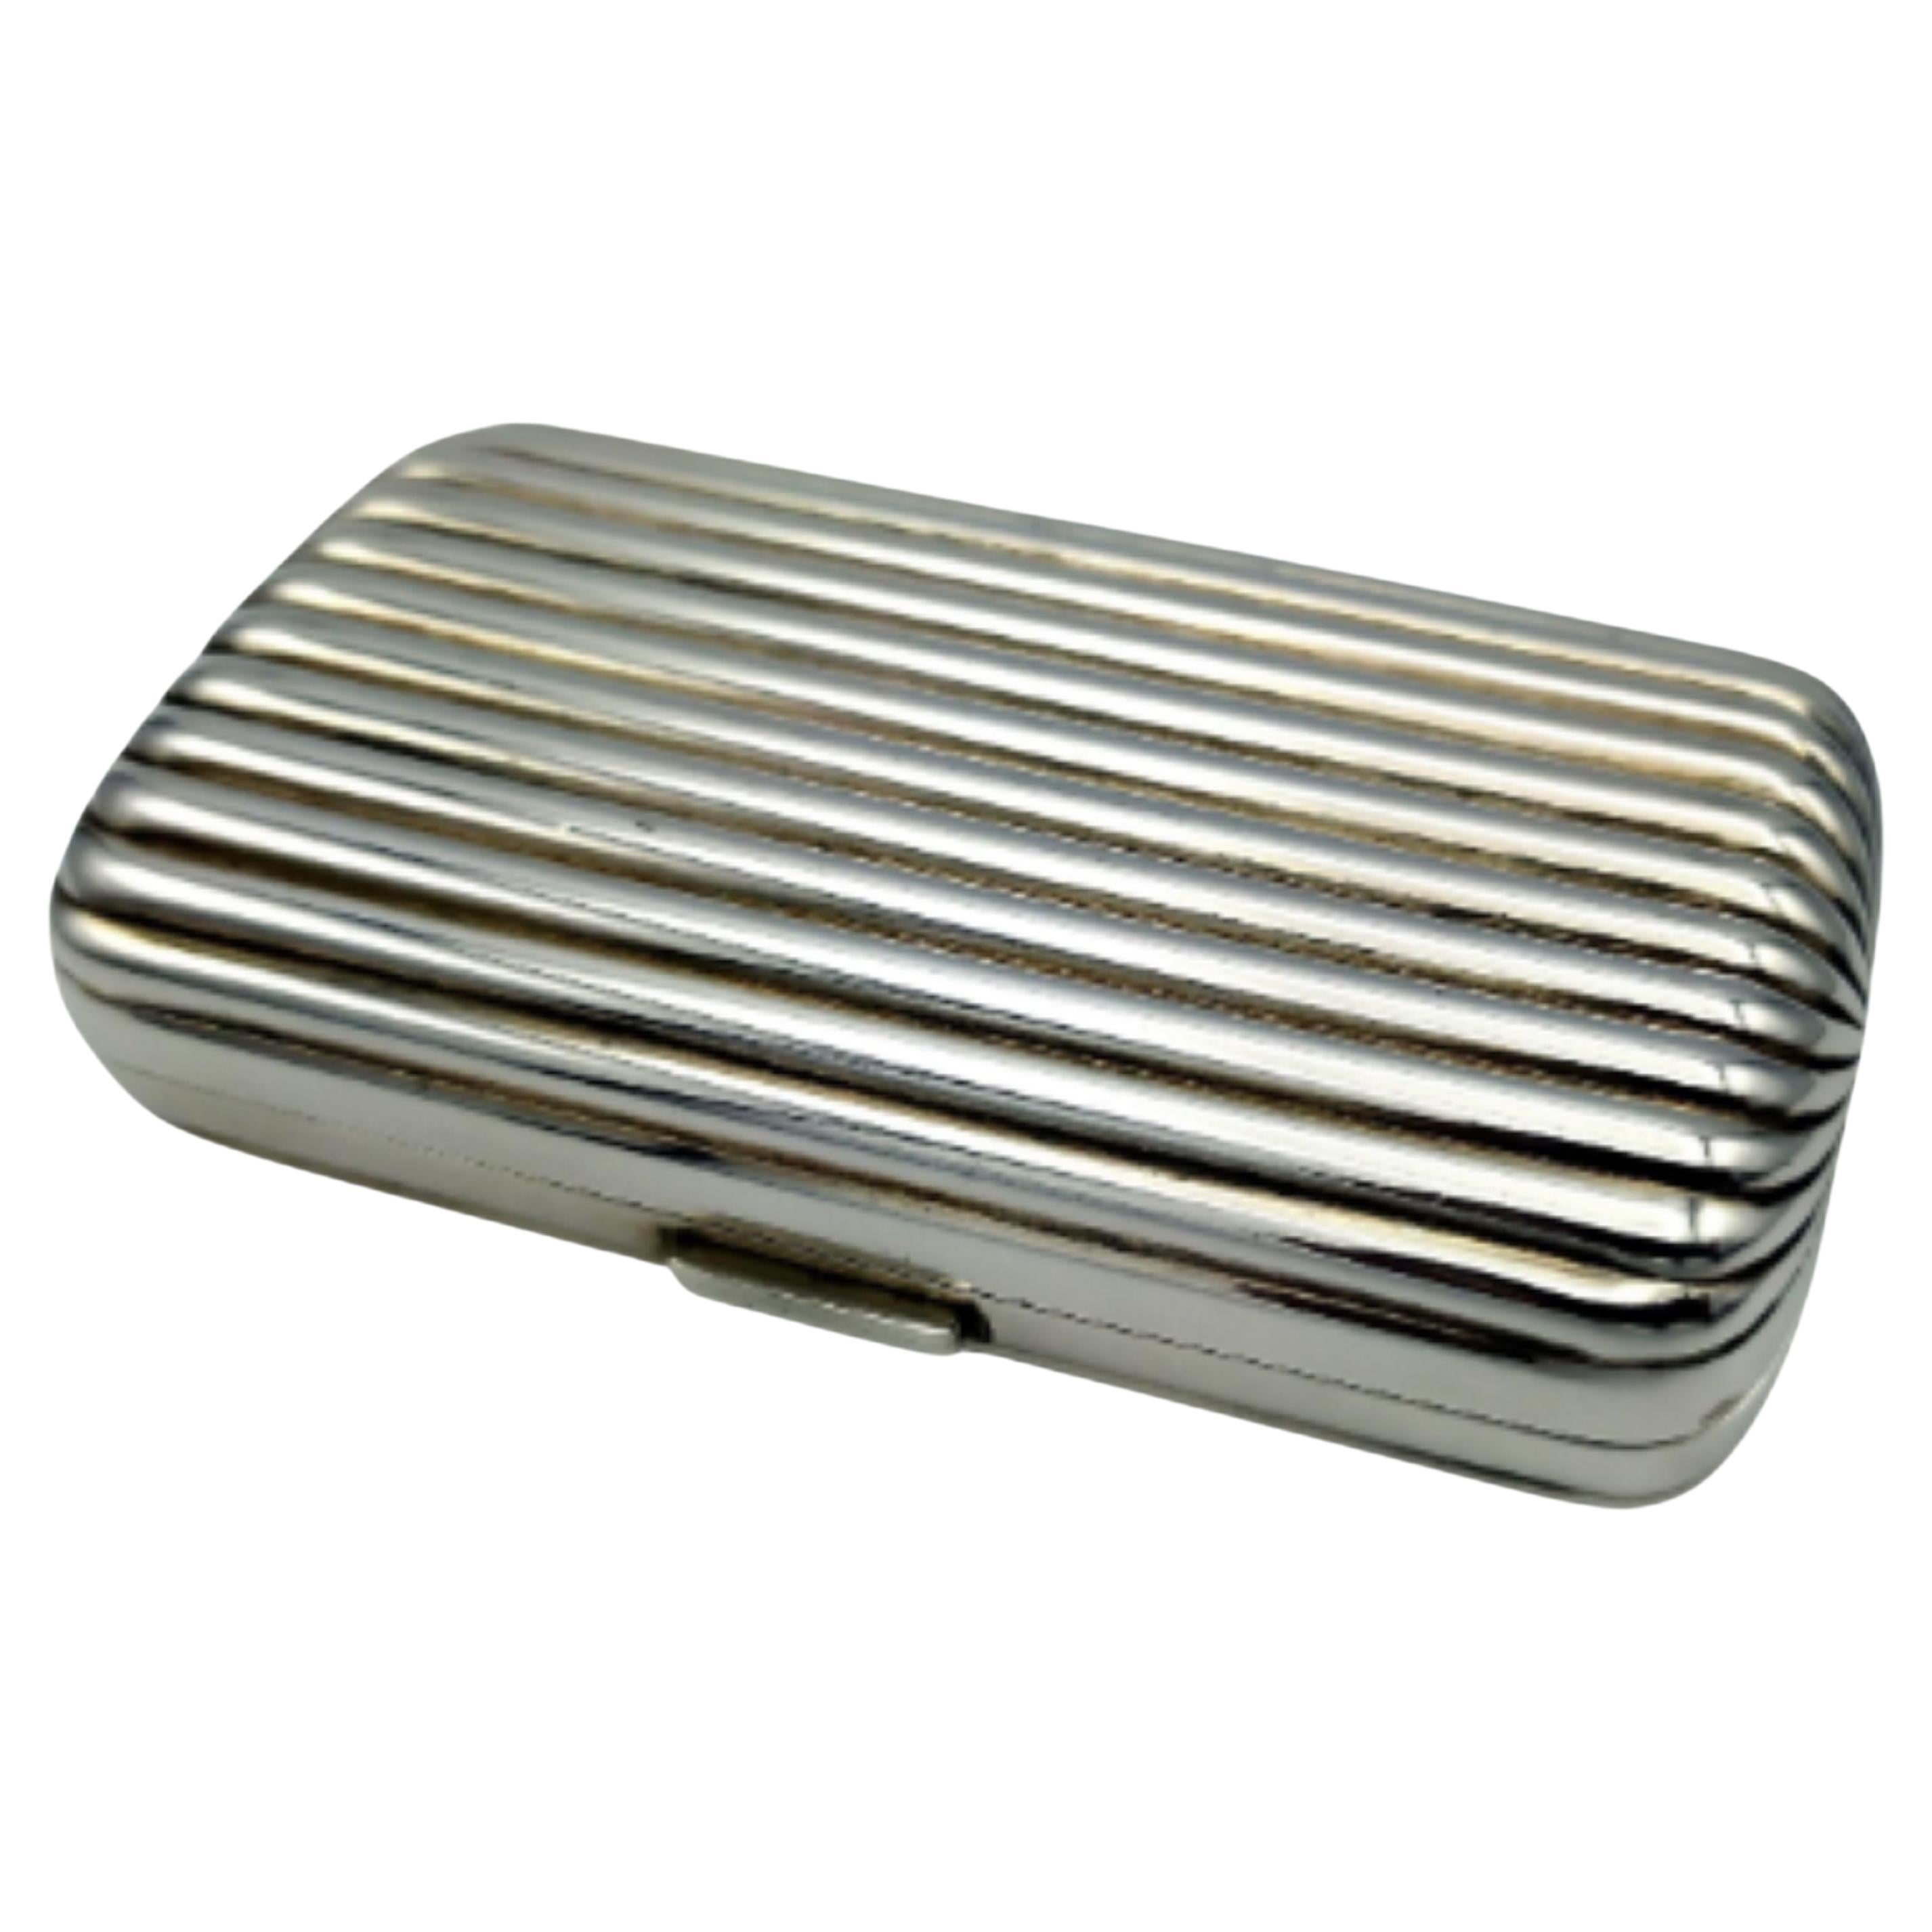 Salimbeni  Striped Cigarette Case, oval section Sterling Silver natural. For Sale